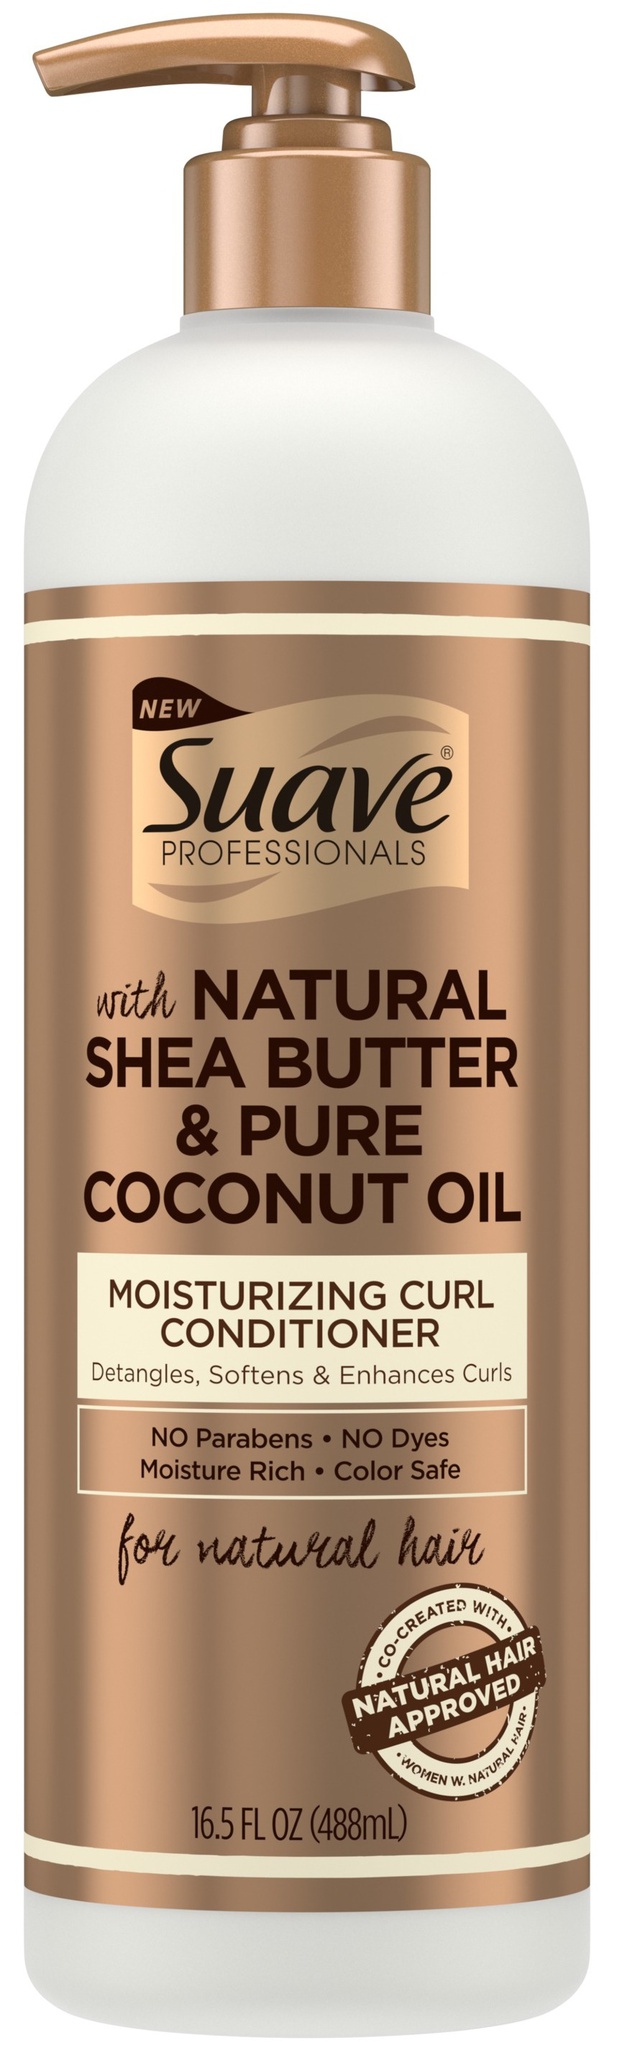 Suave Natural Shea Butter & Pure Coconut Oil Moisturizing Curl Conditioner